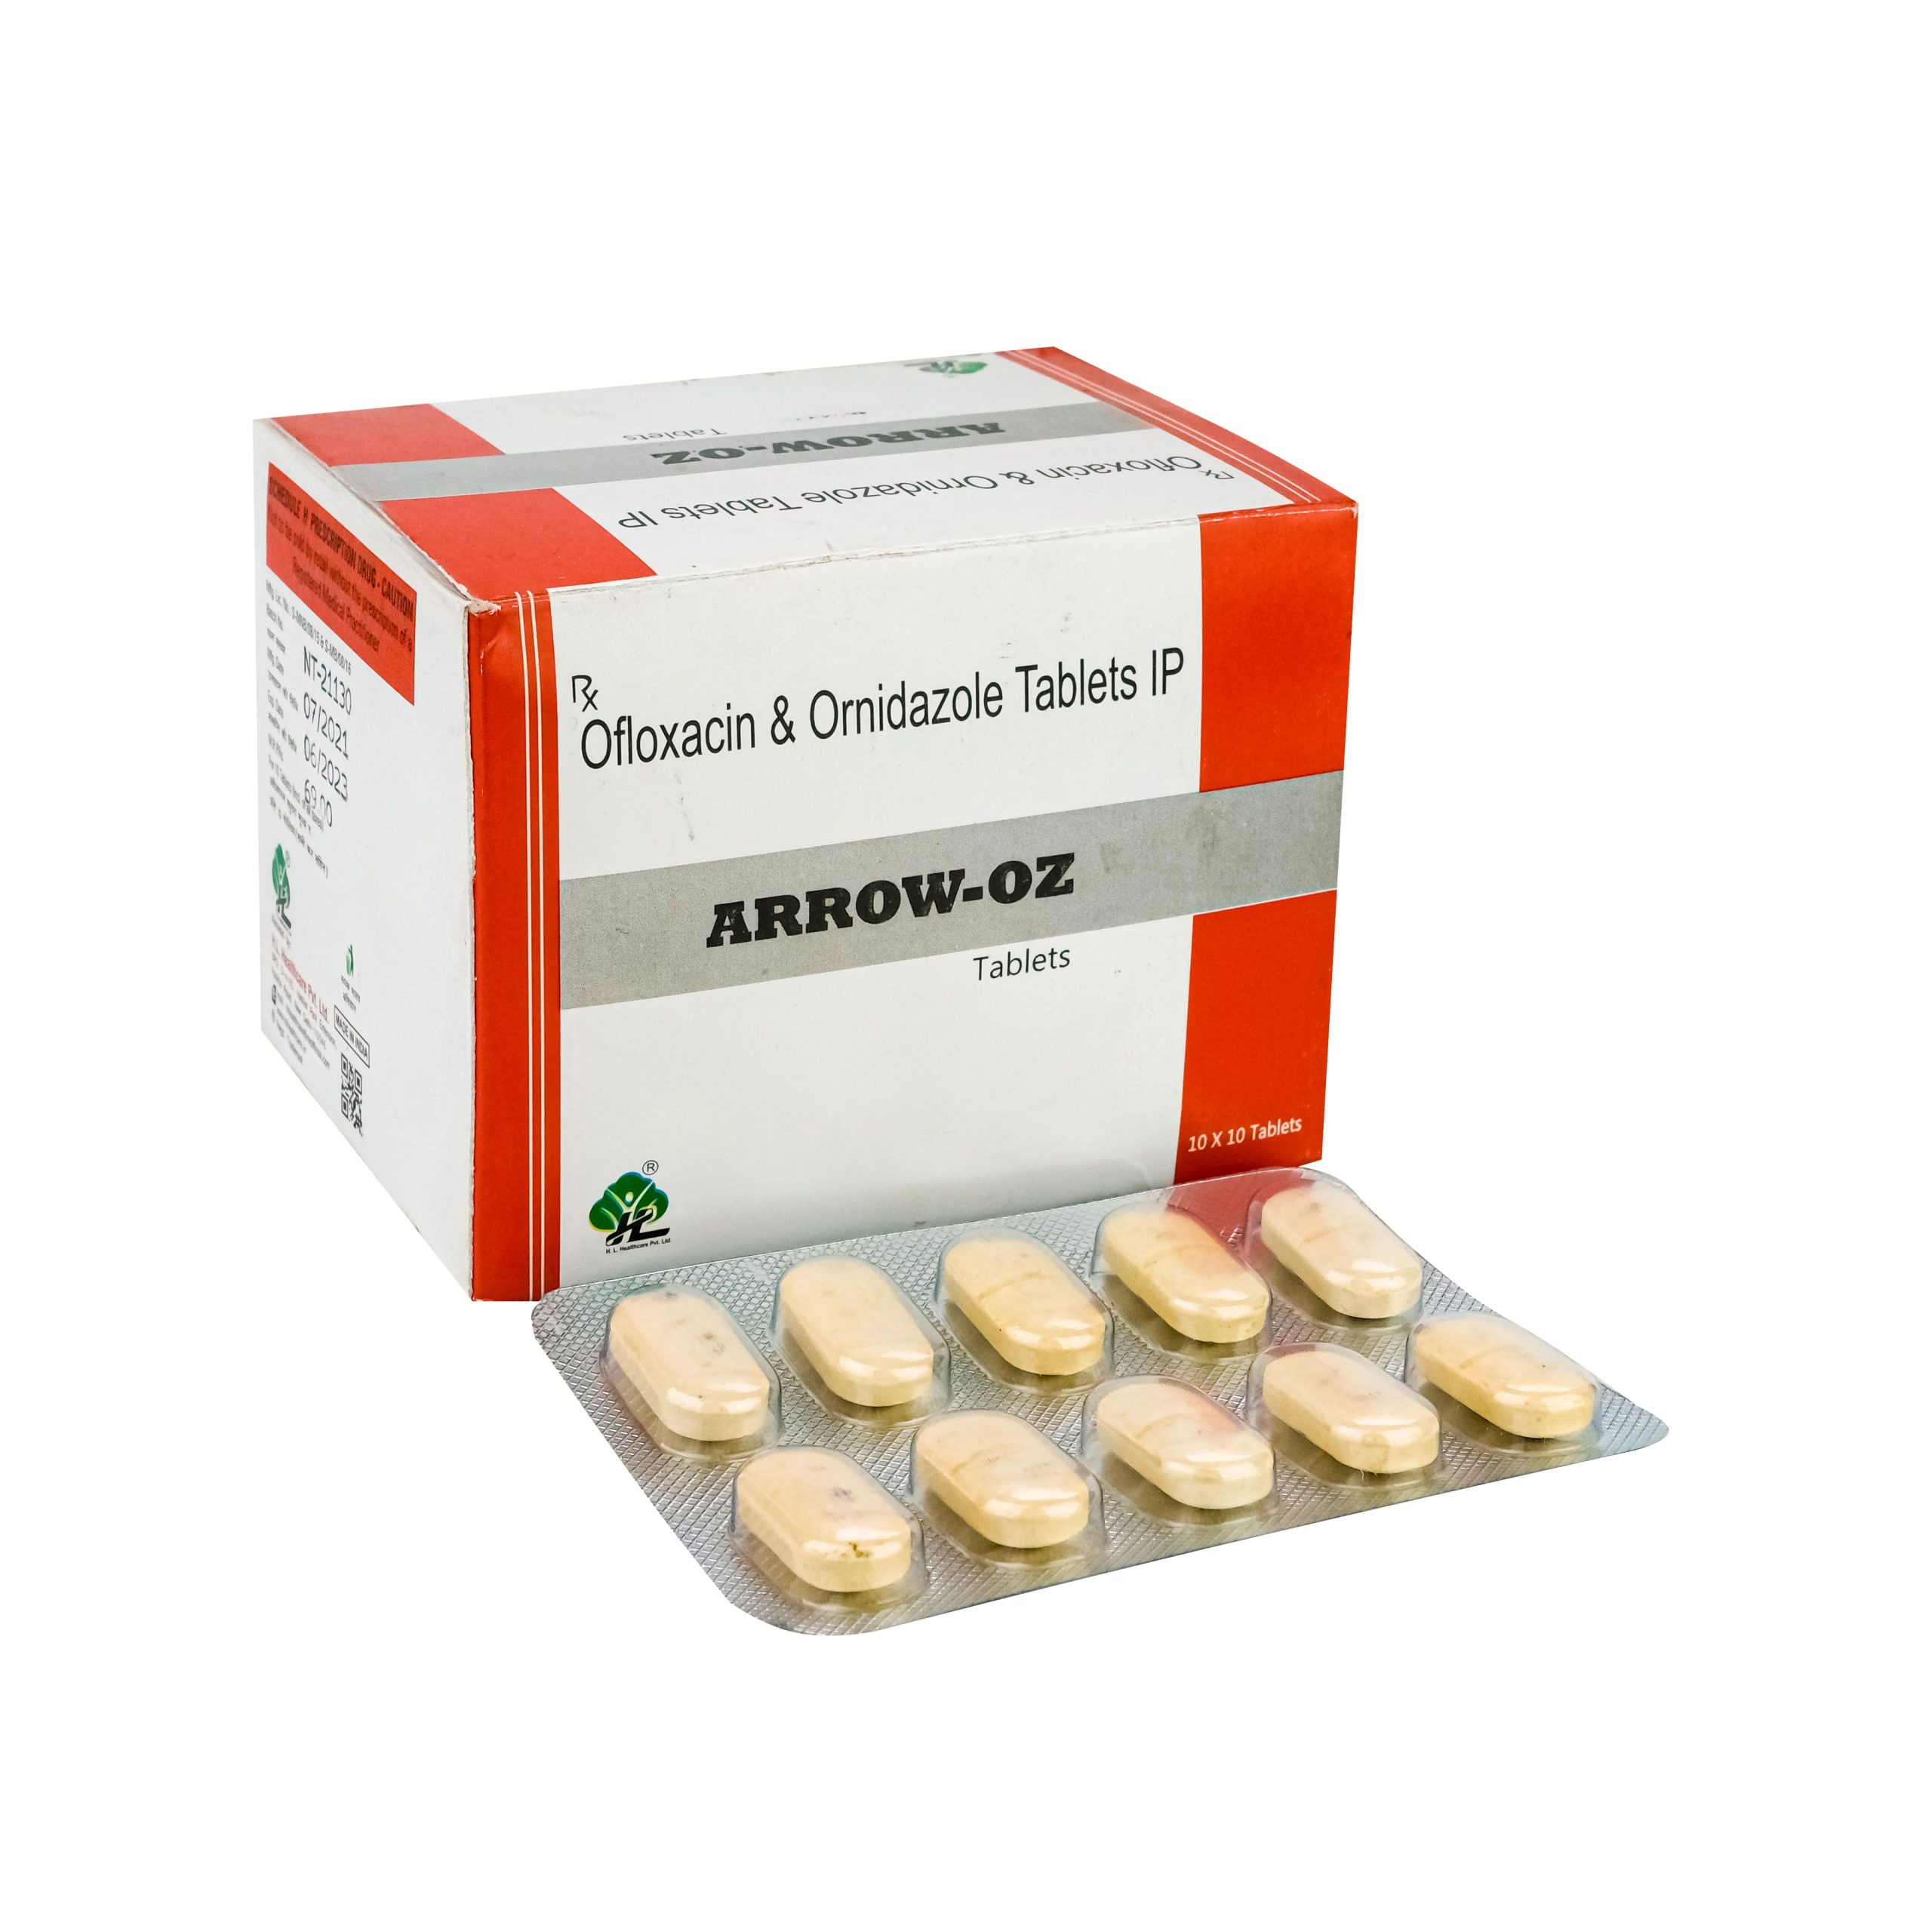 Ofloxacin 200mg and Ornidazole 500mg Tablets